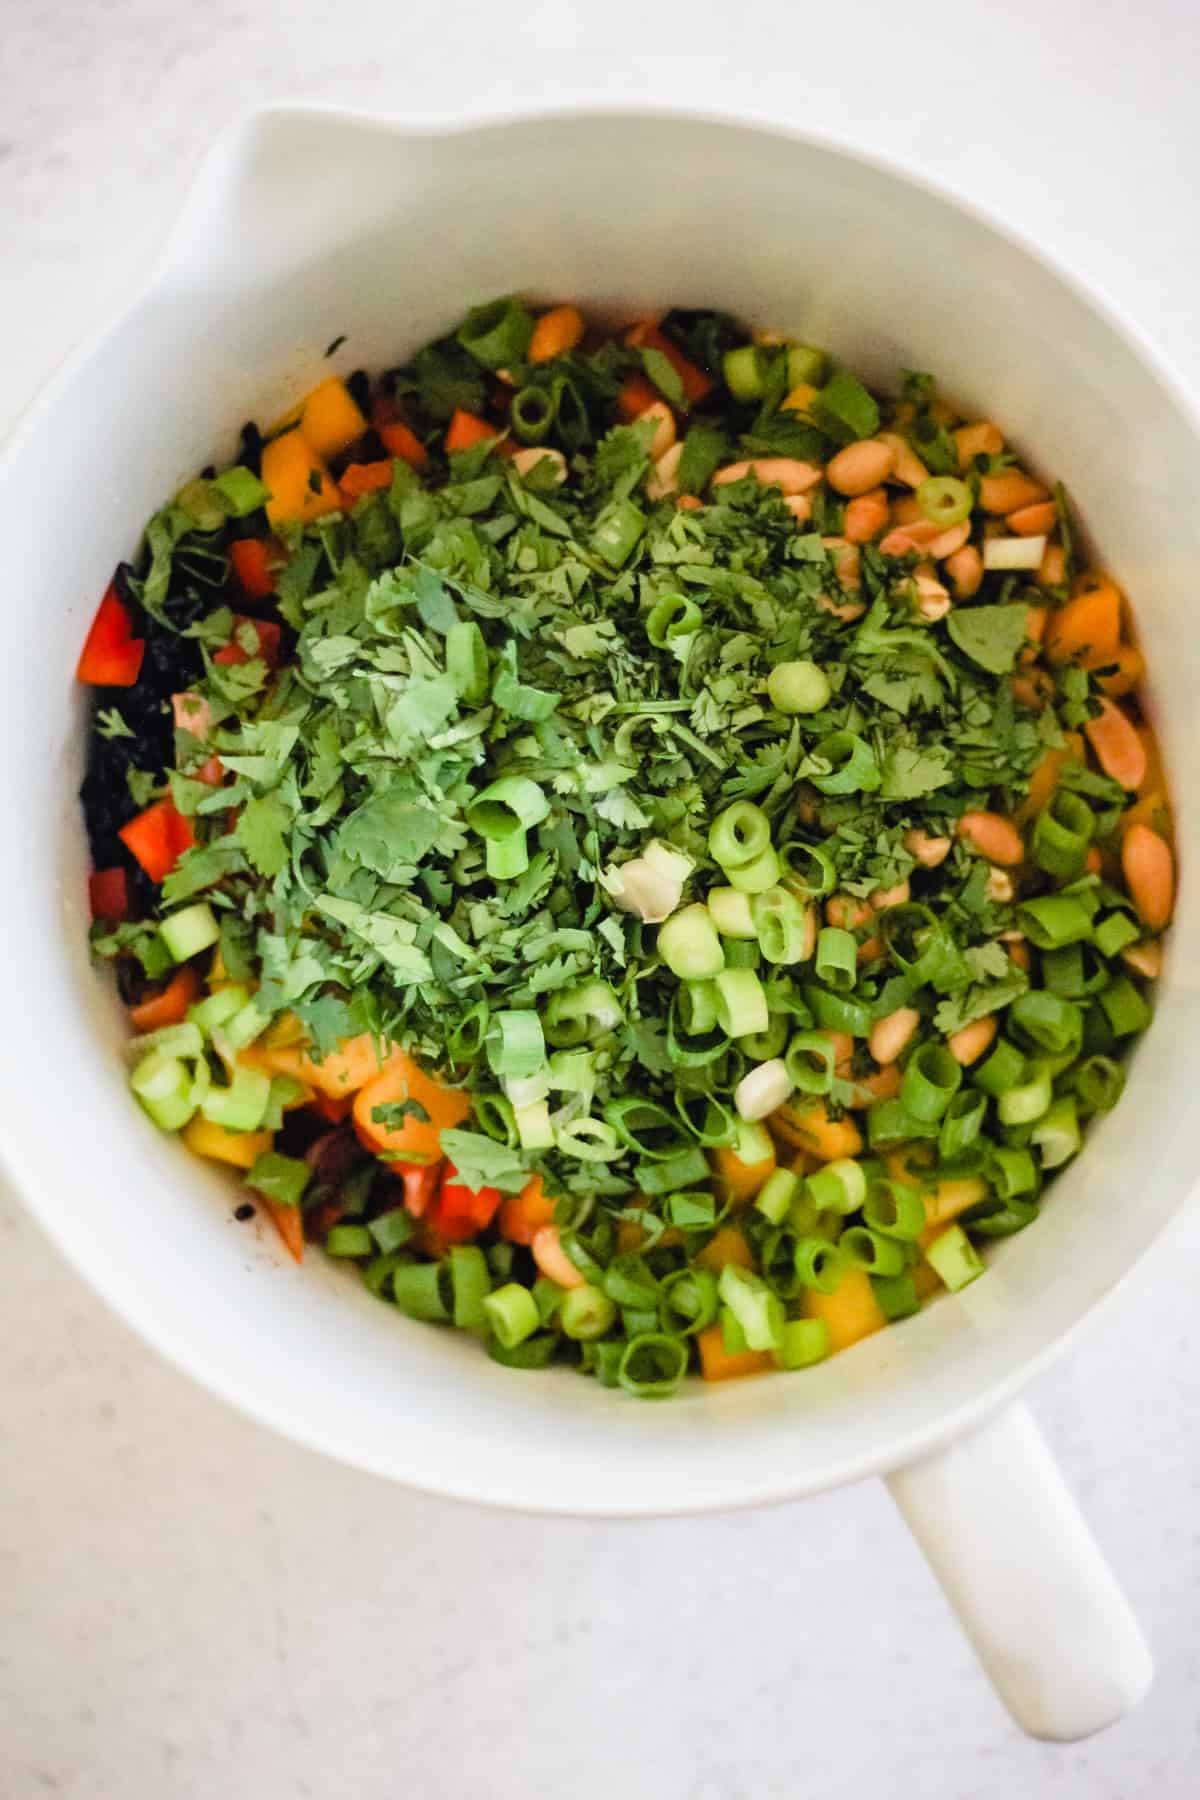 Black Rice Salad ingredients in a large mixing bowl.